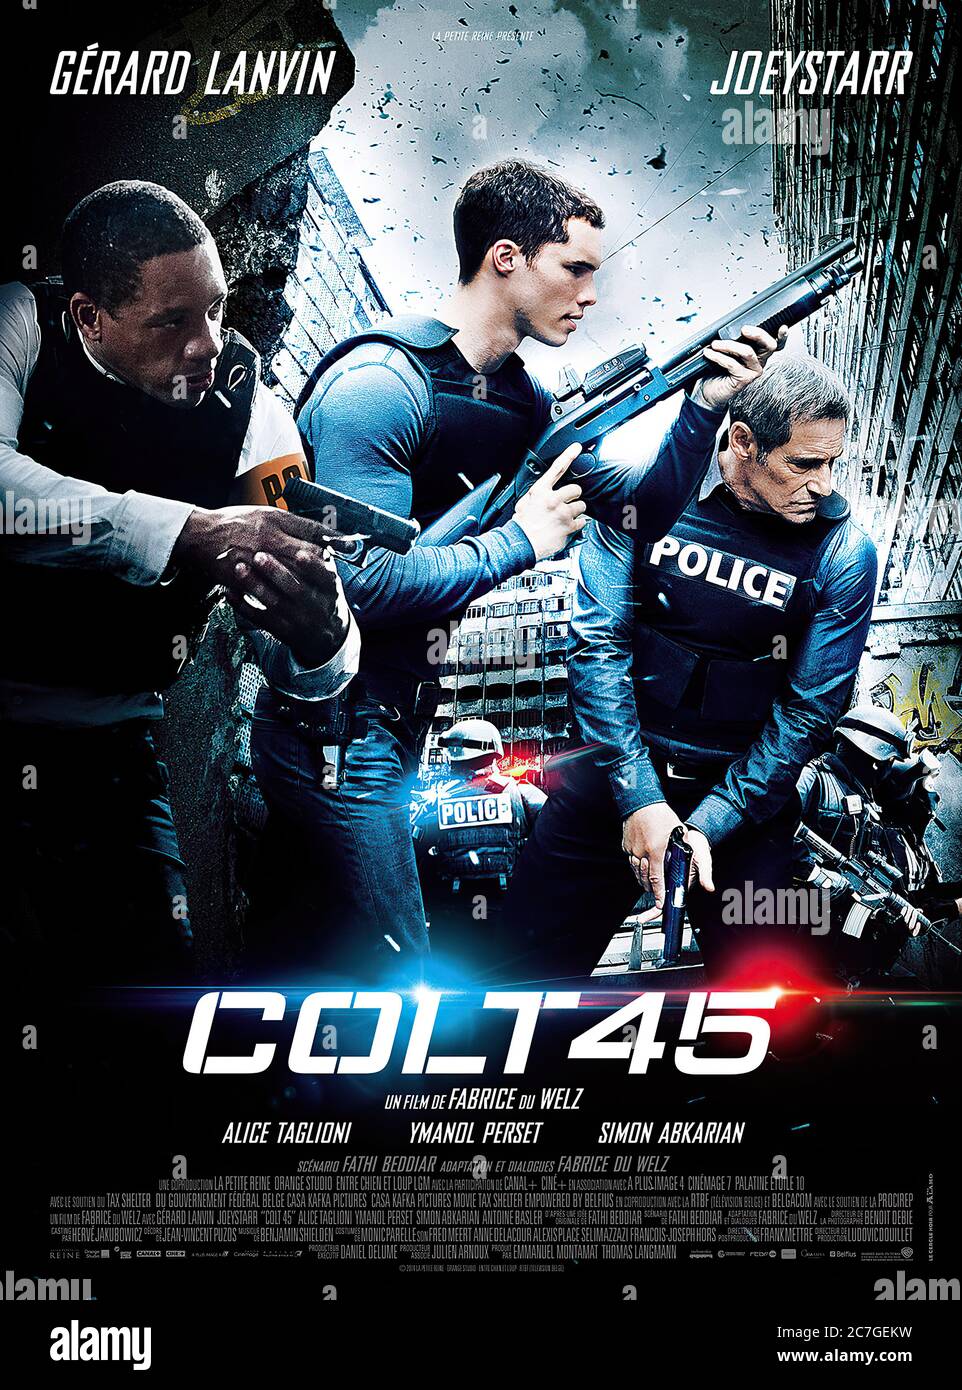 Colt 45 - Movie Poster Stock Photo